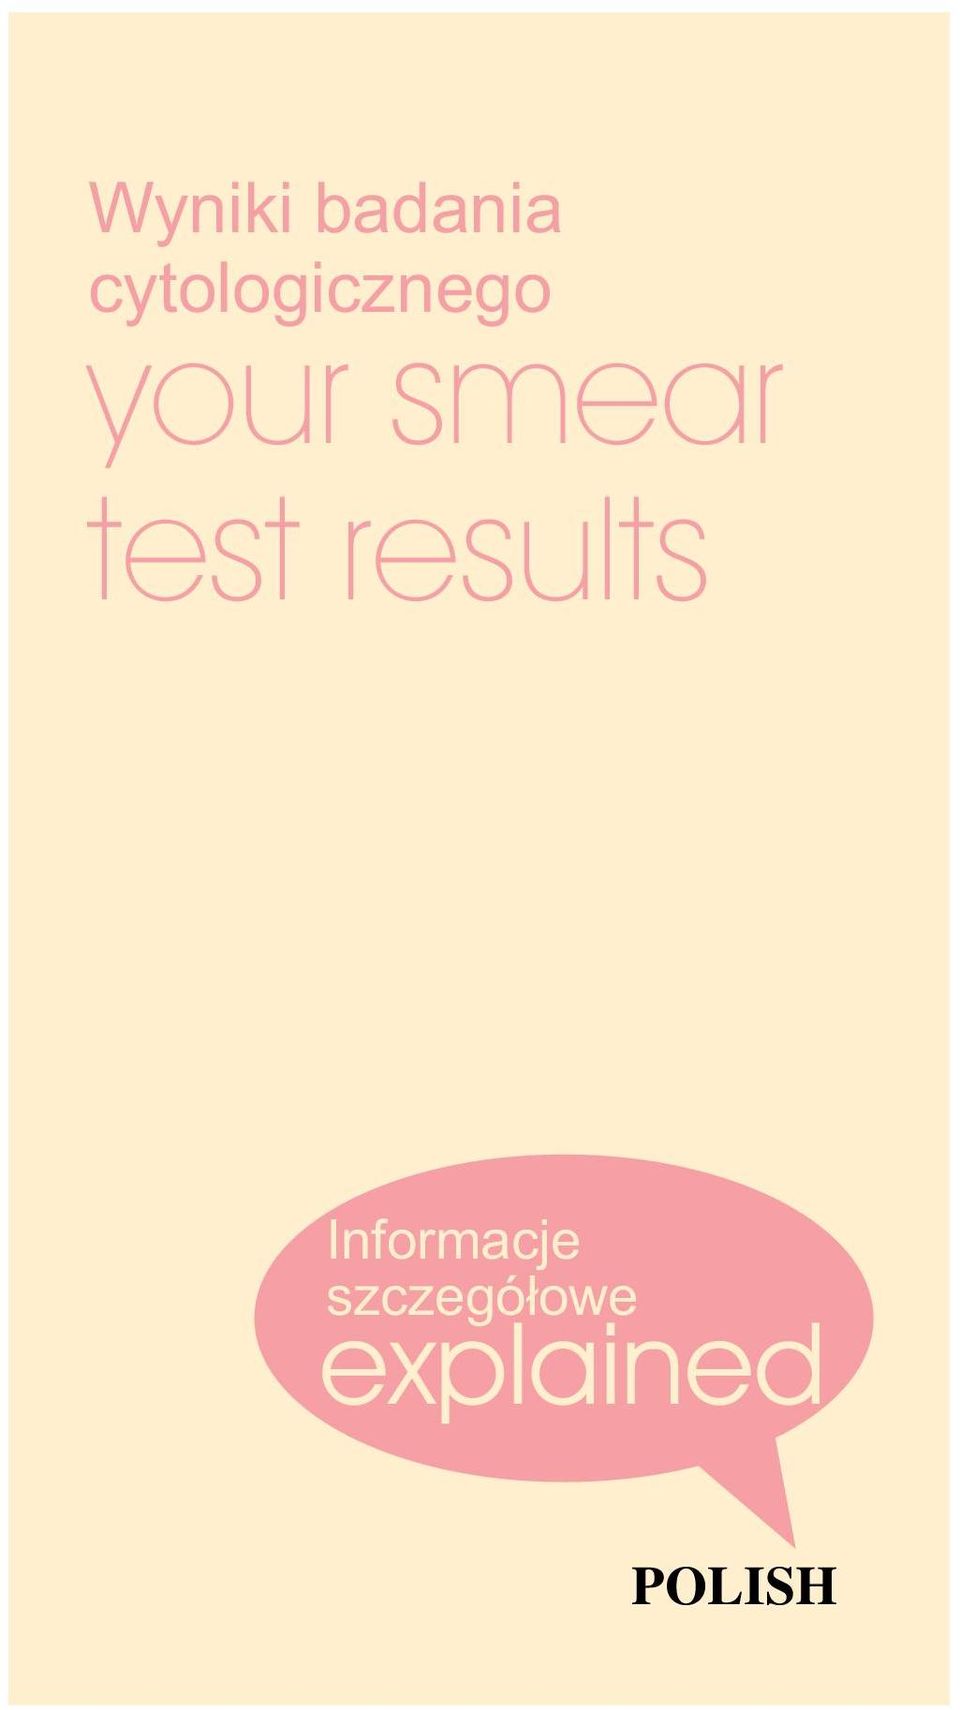 smear test results